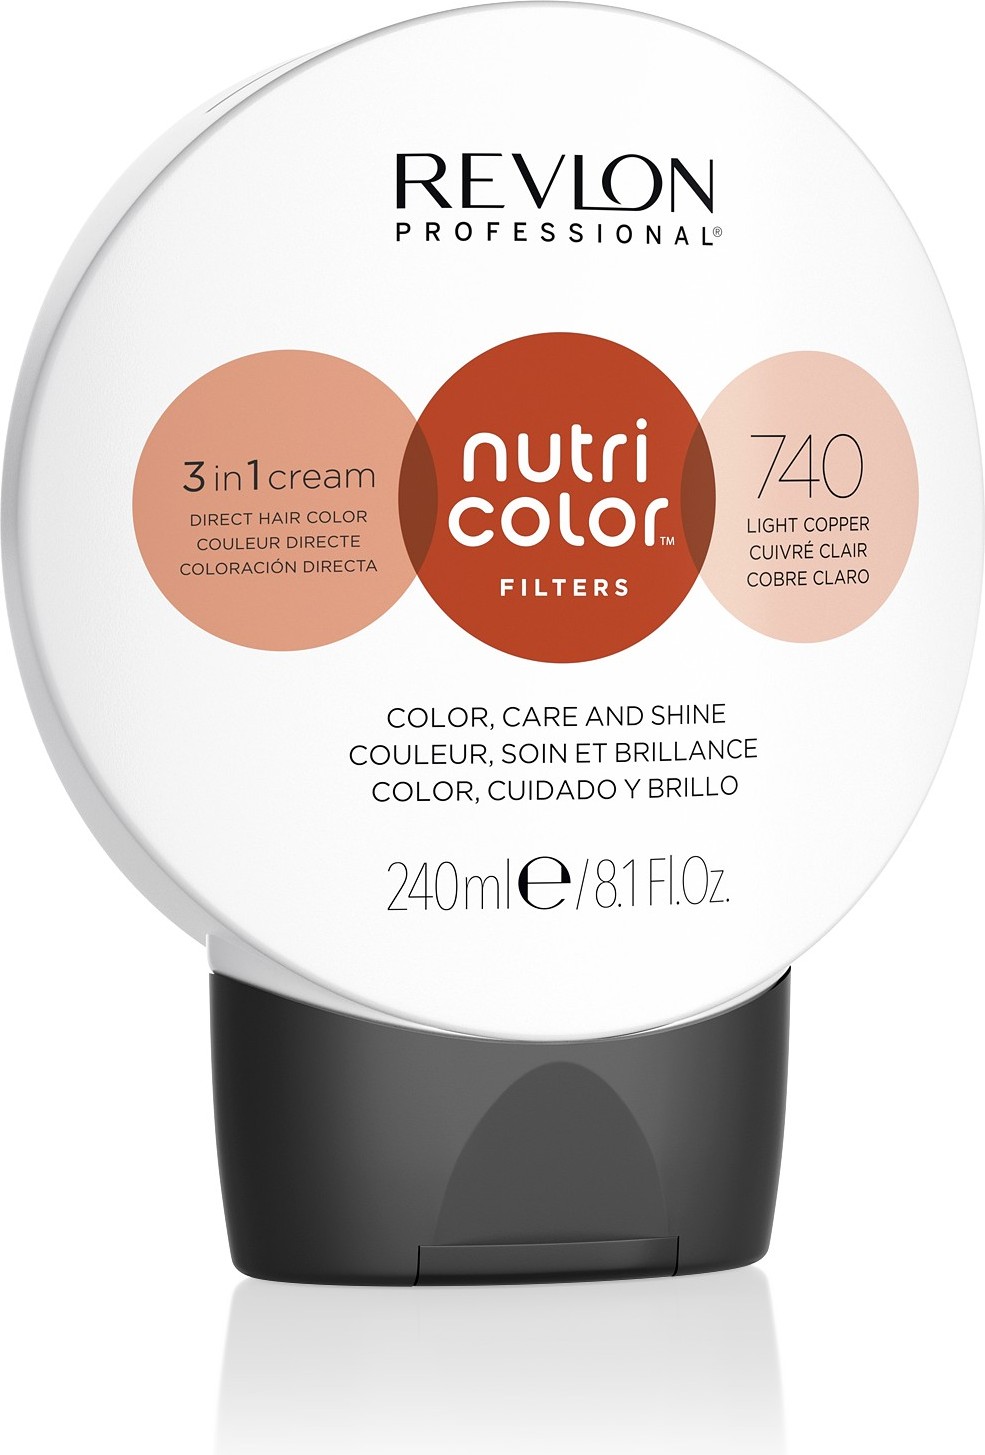  Revlon Professional Nutri Color Filters 740 Copper 240 ml 